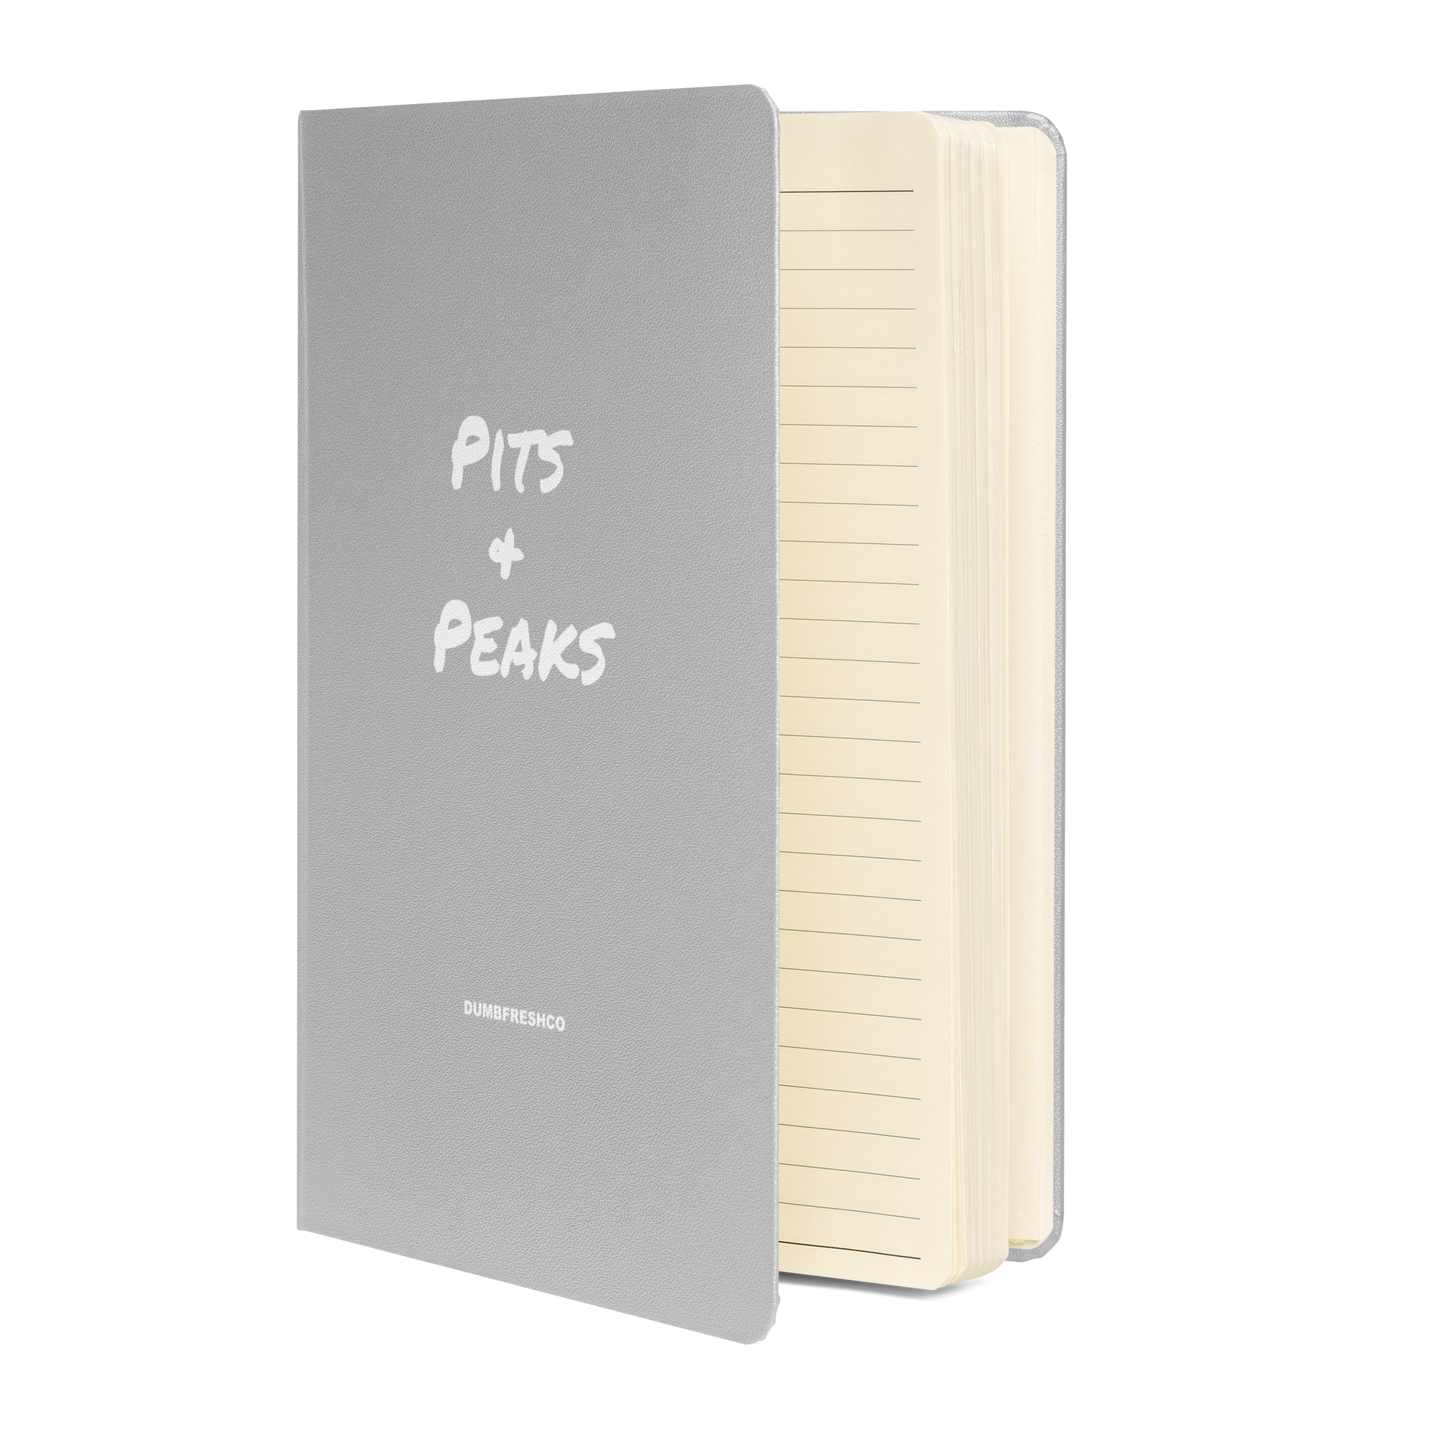 Pits and Peaks Hardcover notebook - DUMBFRESHCO